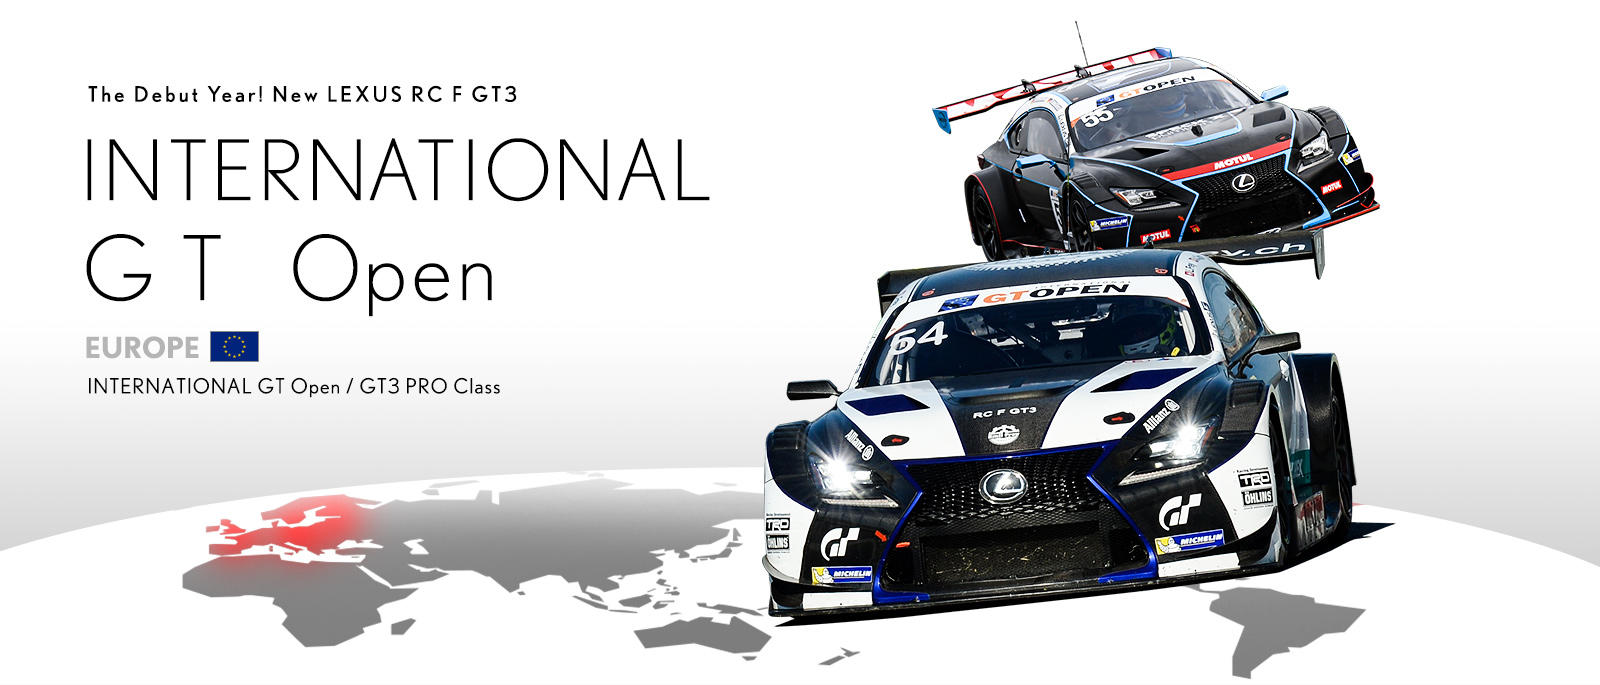 INTERNATIONAL GT Open（GT3 PRO）〜14戦で6勝を挙げランキング3位獲得 欧州の代表的なGT3シリーズで結果を残す〜 | The Debut Year! New LEXUS RC F GT3